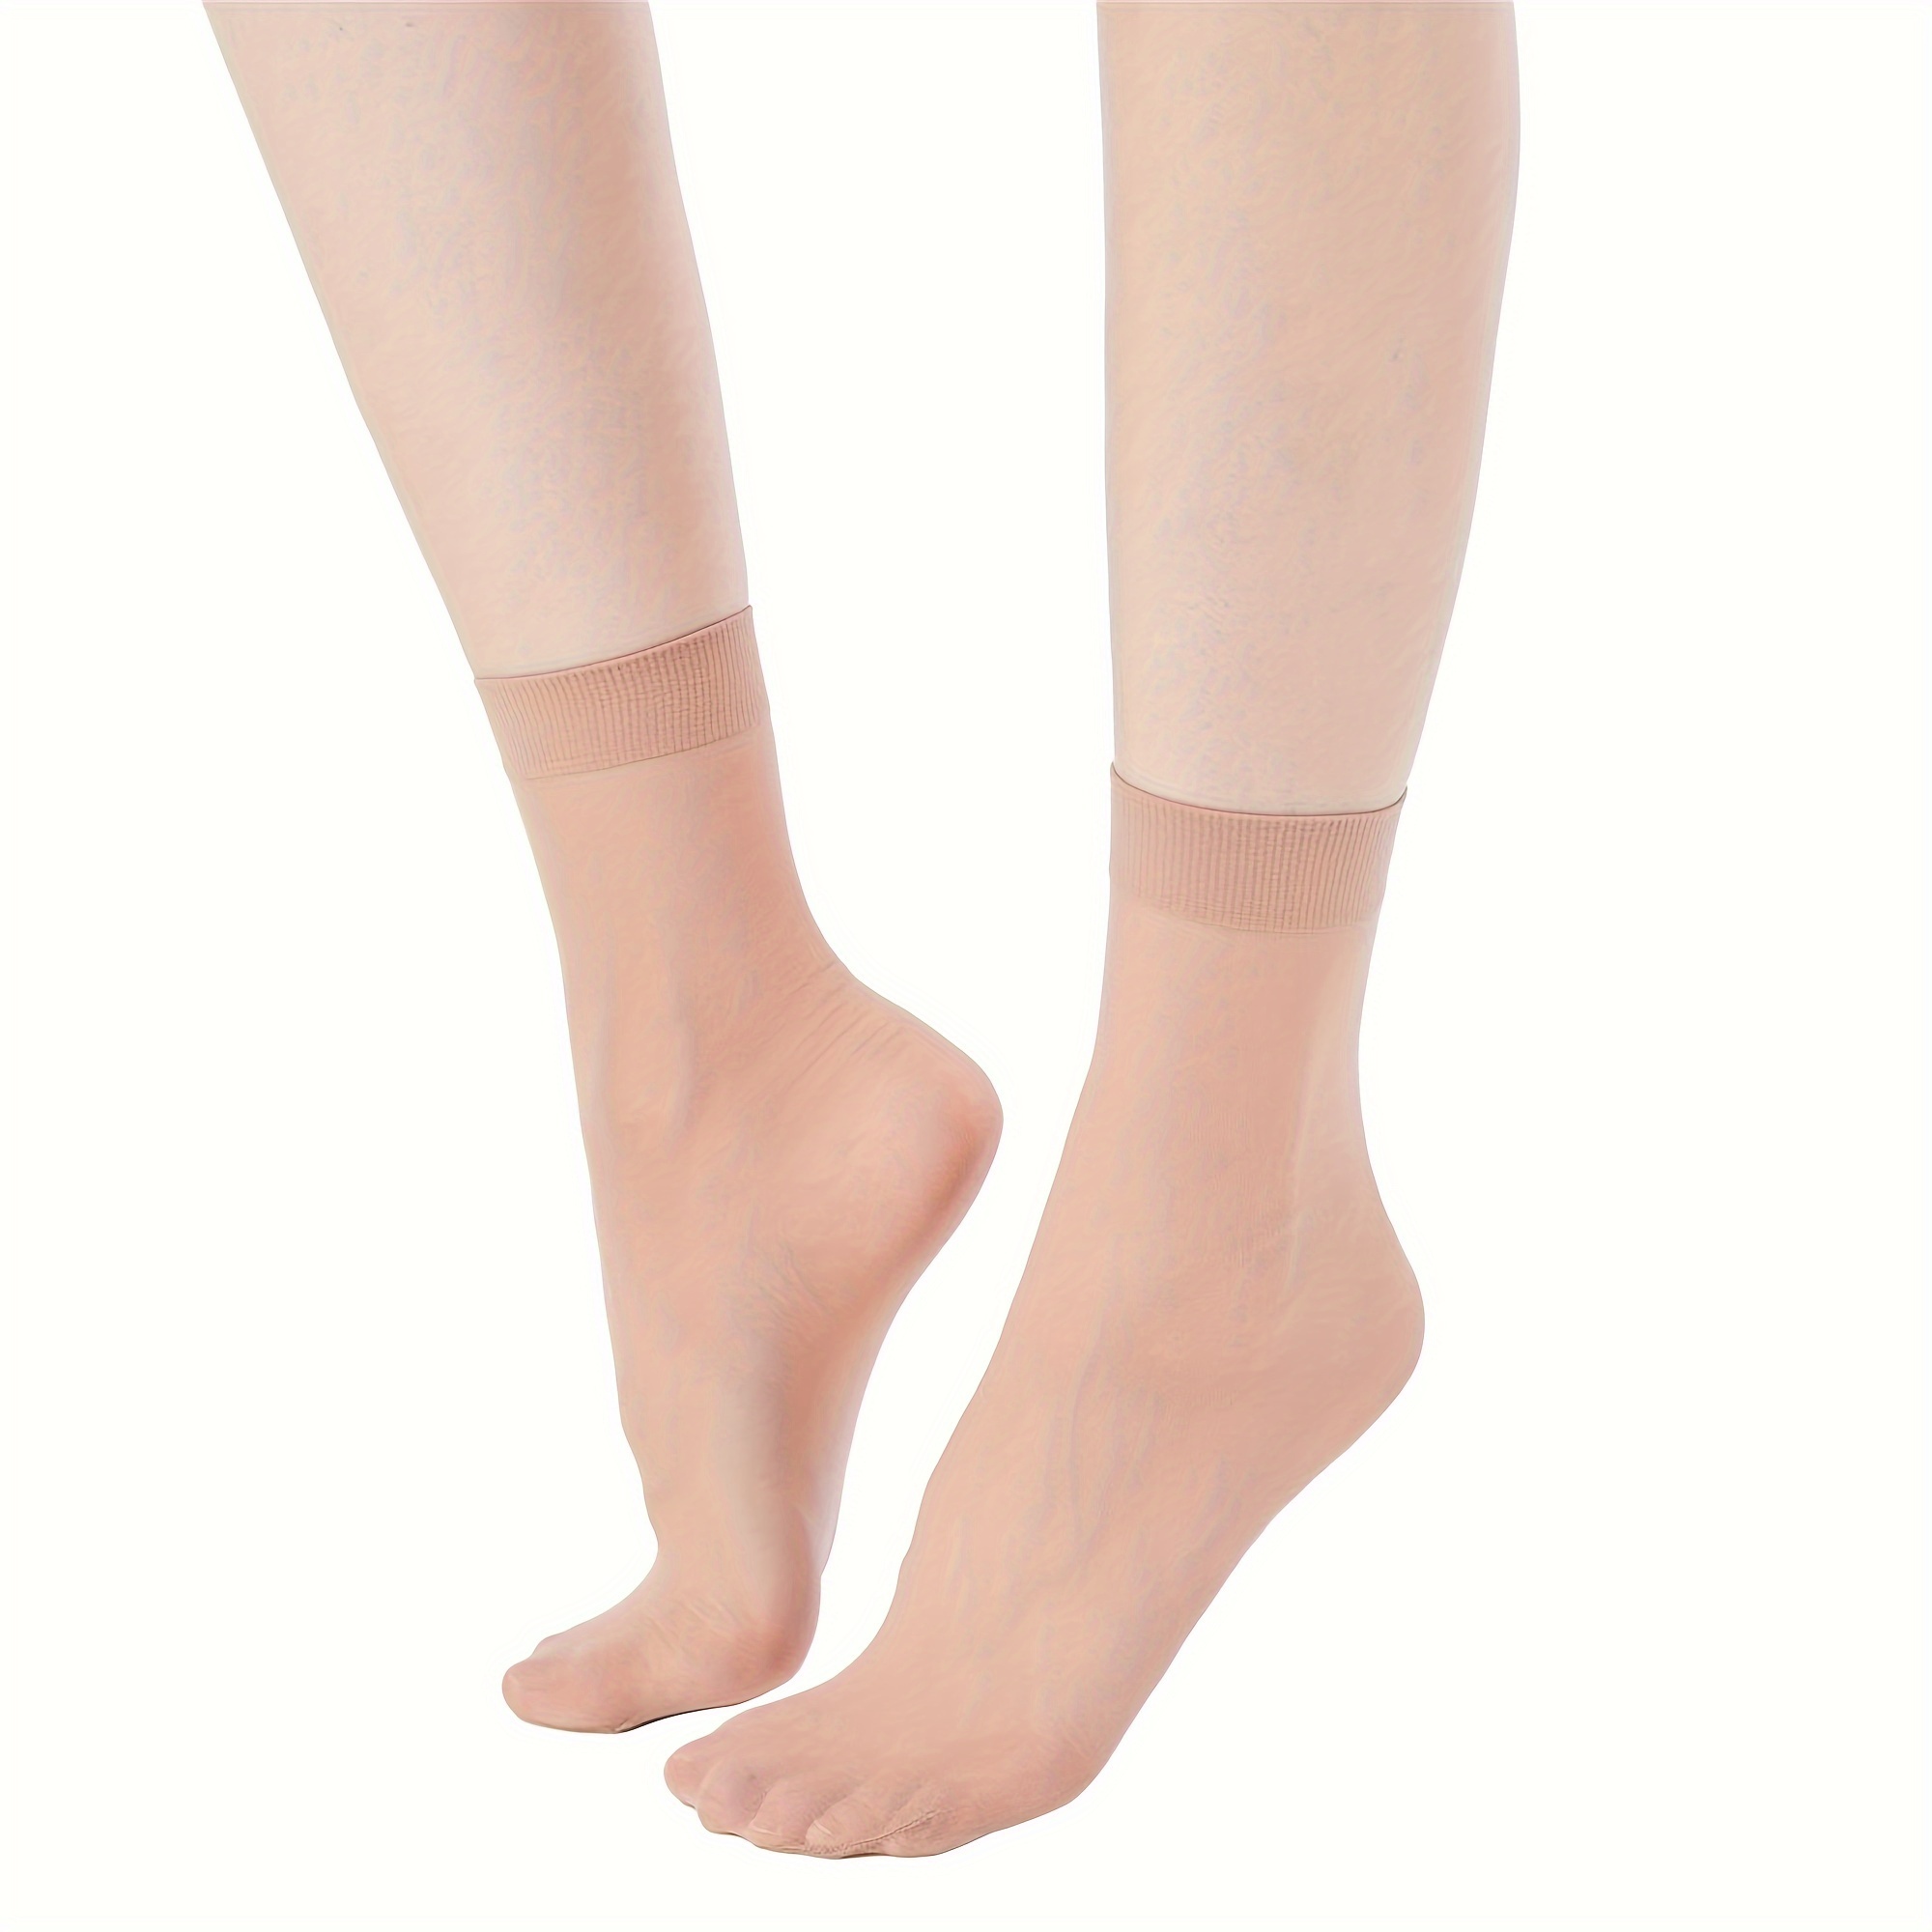 

10 Pairs Solid Sheer Socks, Comfy & Breathable Reinforced Toe Short Socks, Women's Stockings & Hosiery